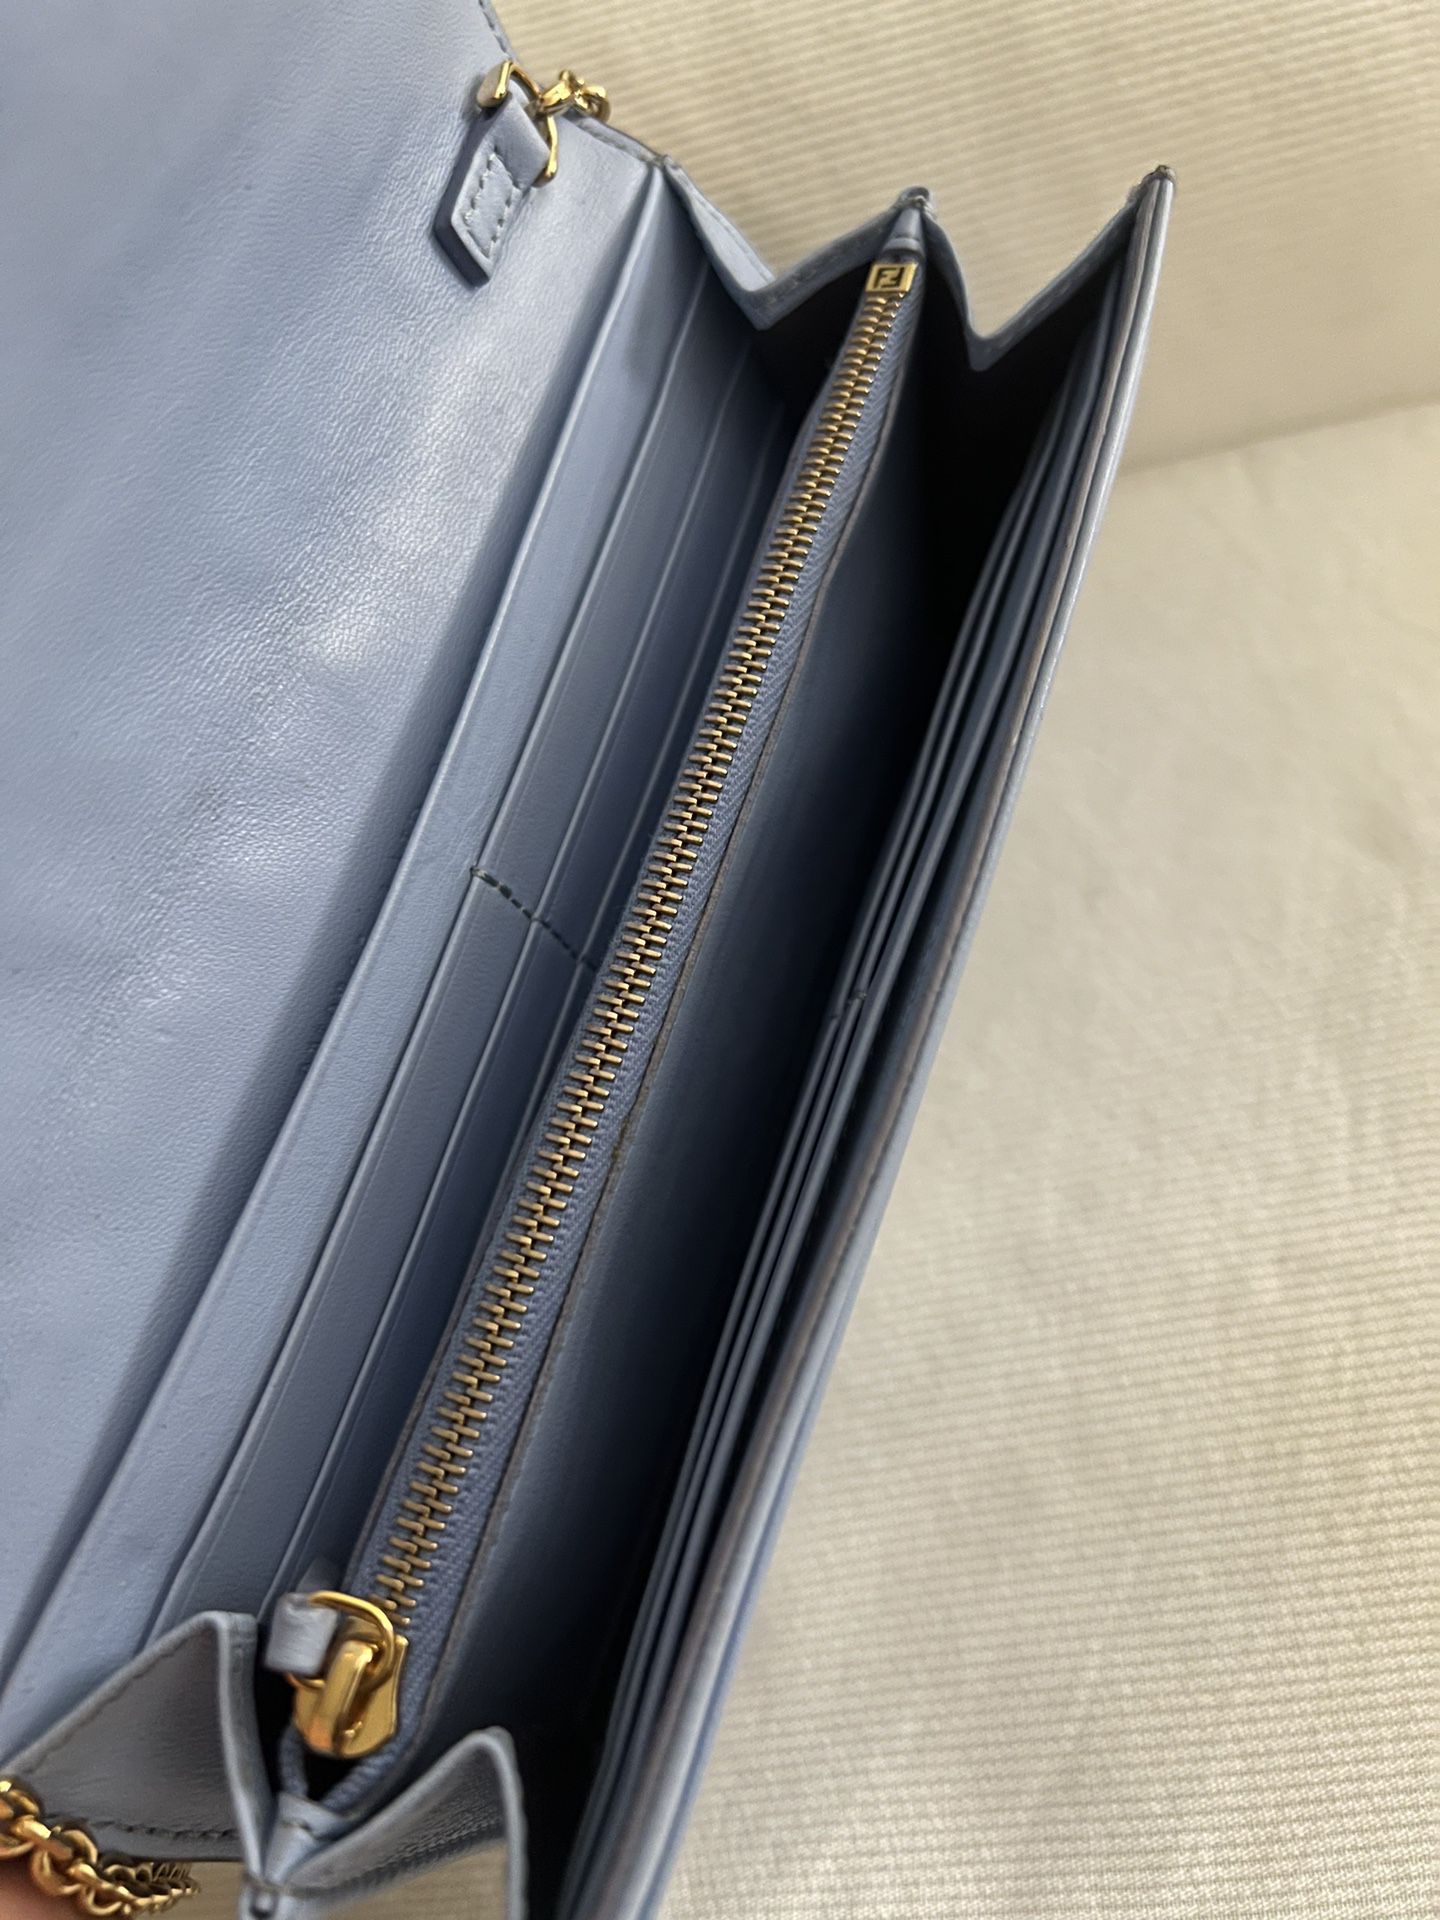 Fendi 'Baguette' wallet with chain, Women's Accessories